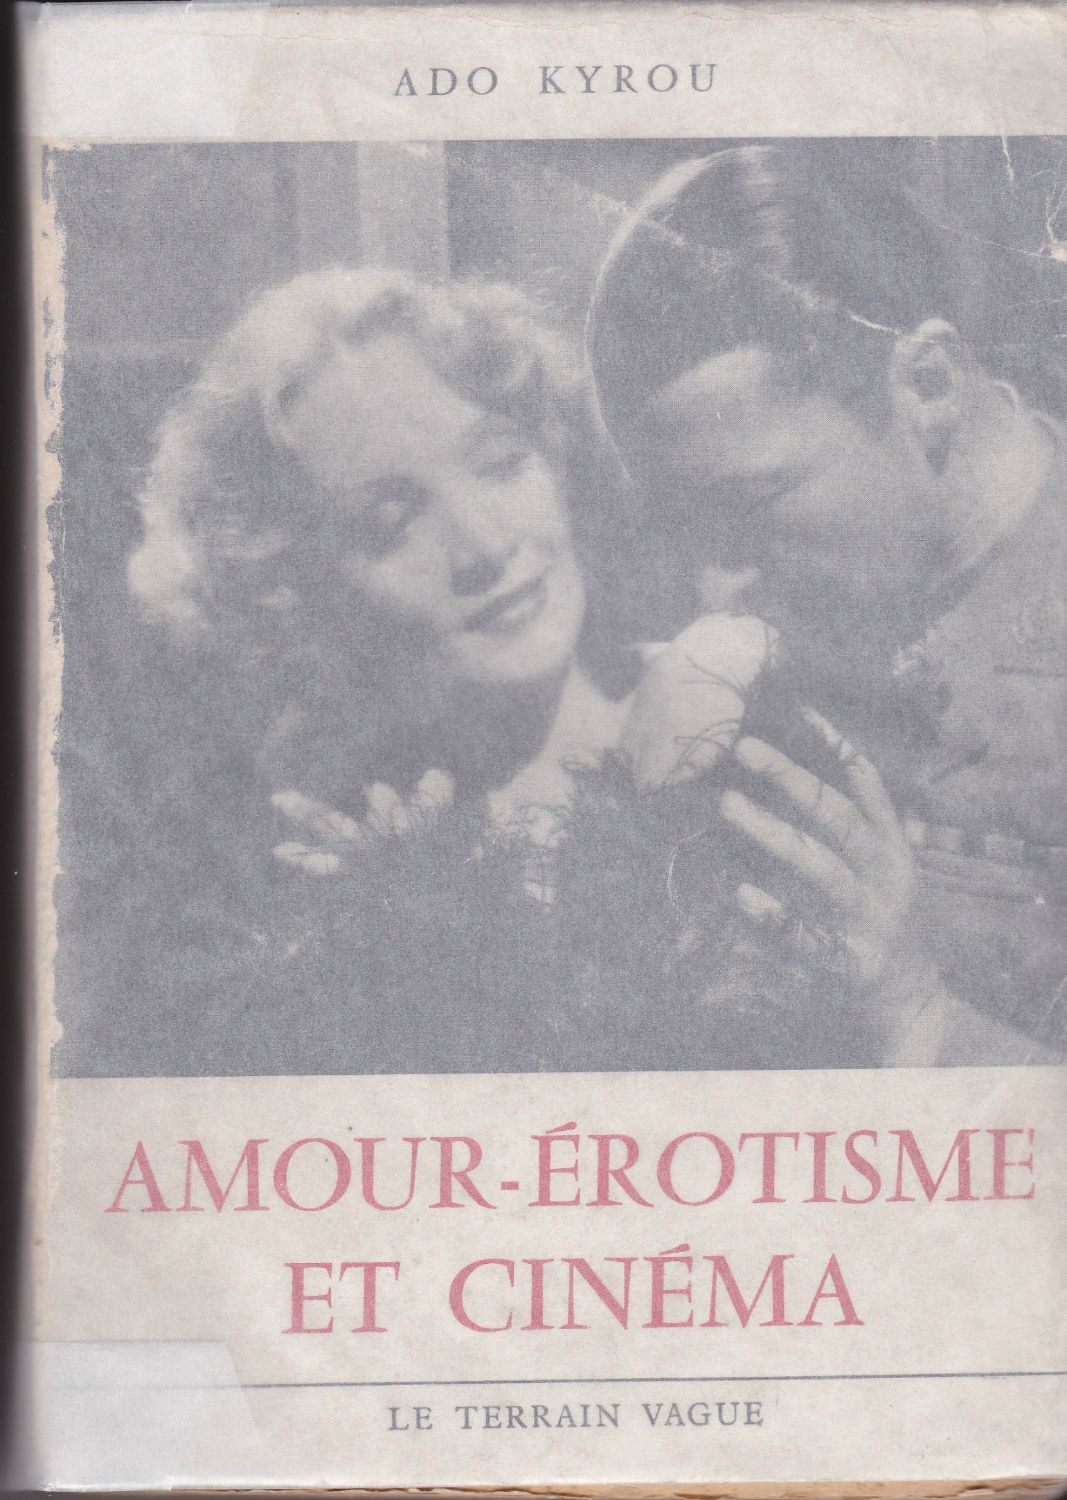 Amour-erotisme et cinema.